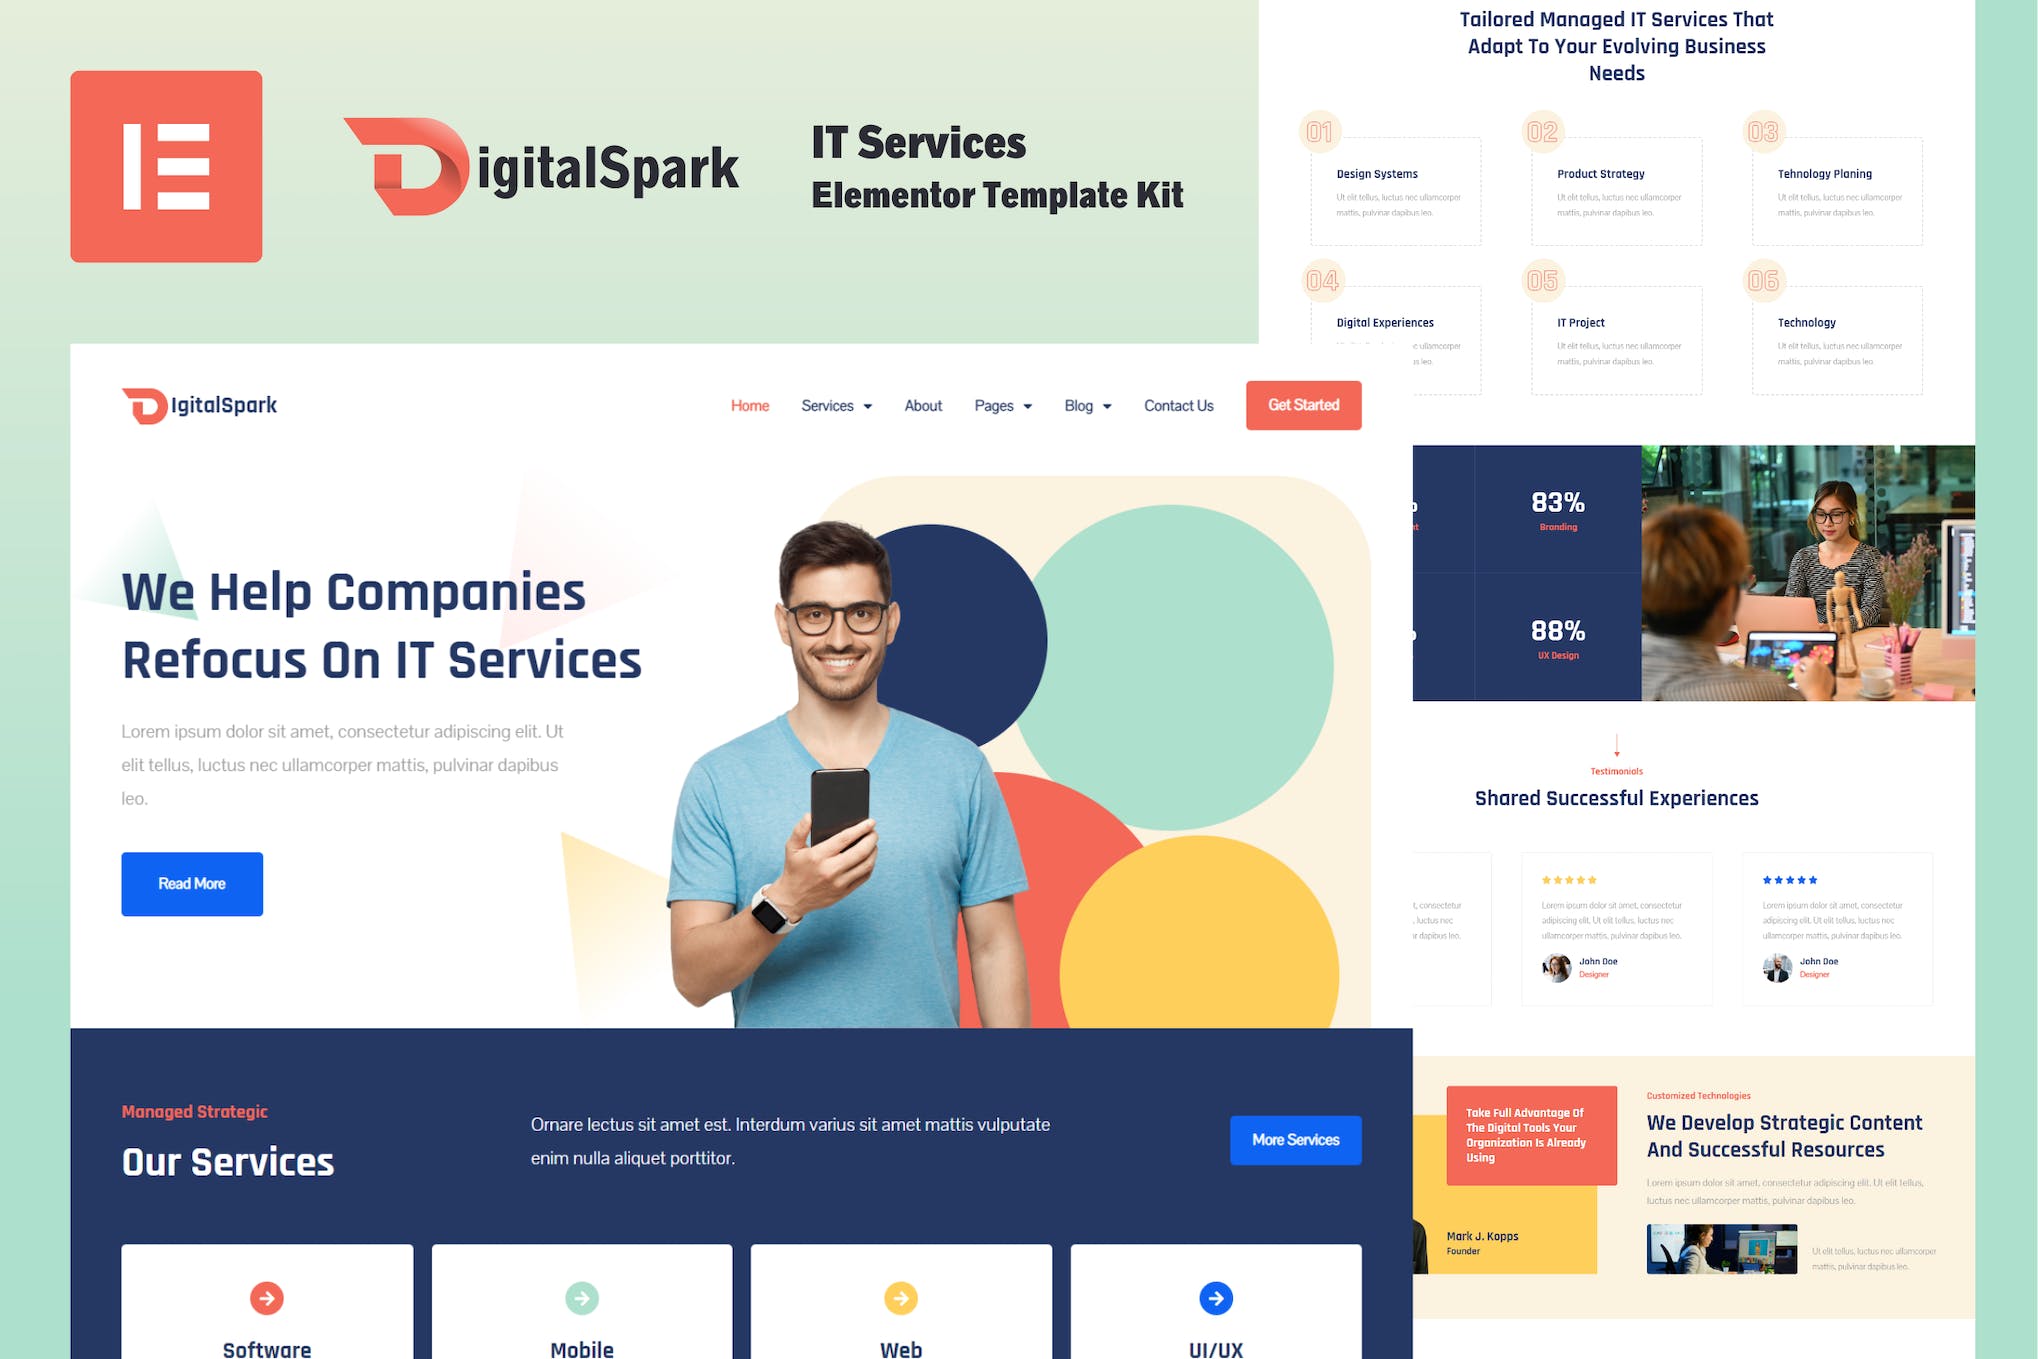 DigitalSpark - IT Services Elementor Template Kit